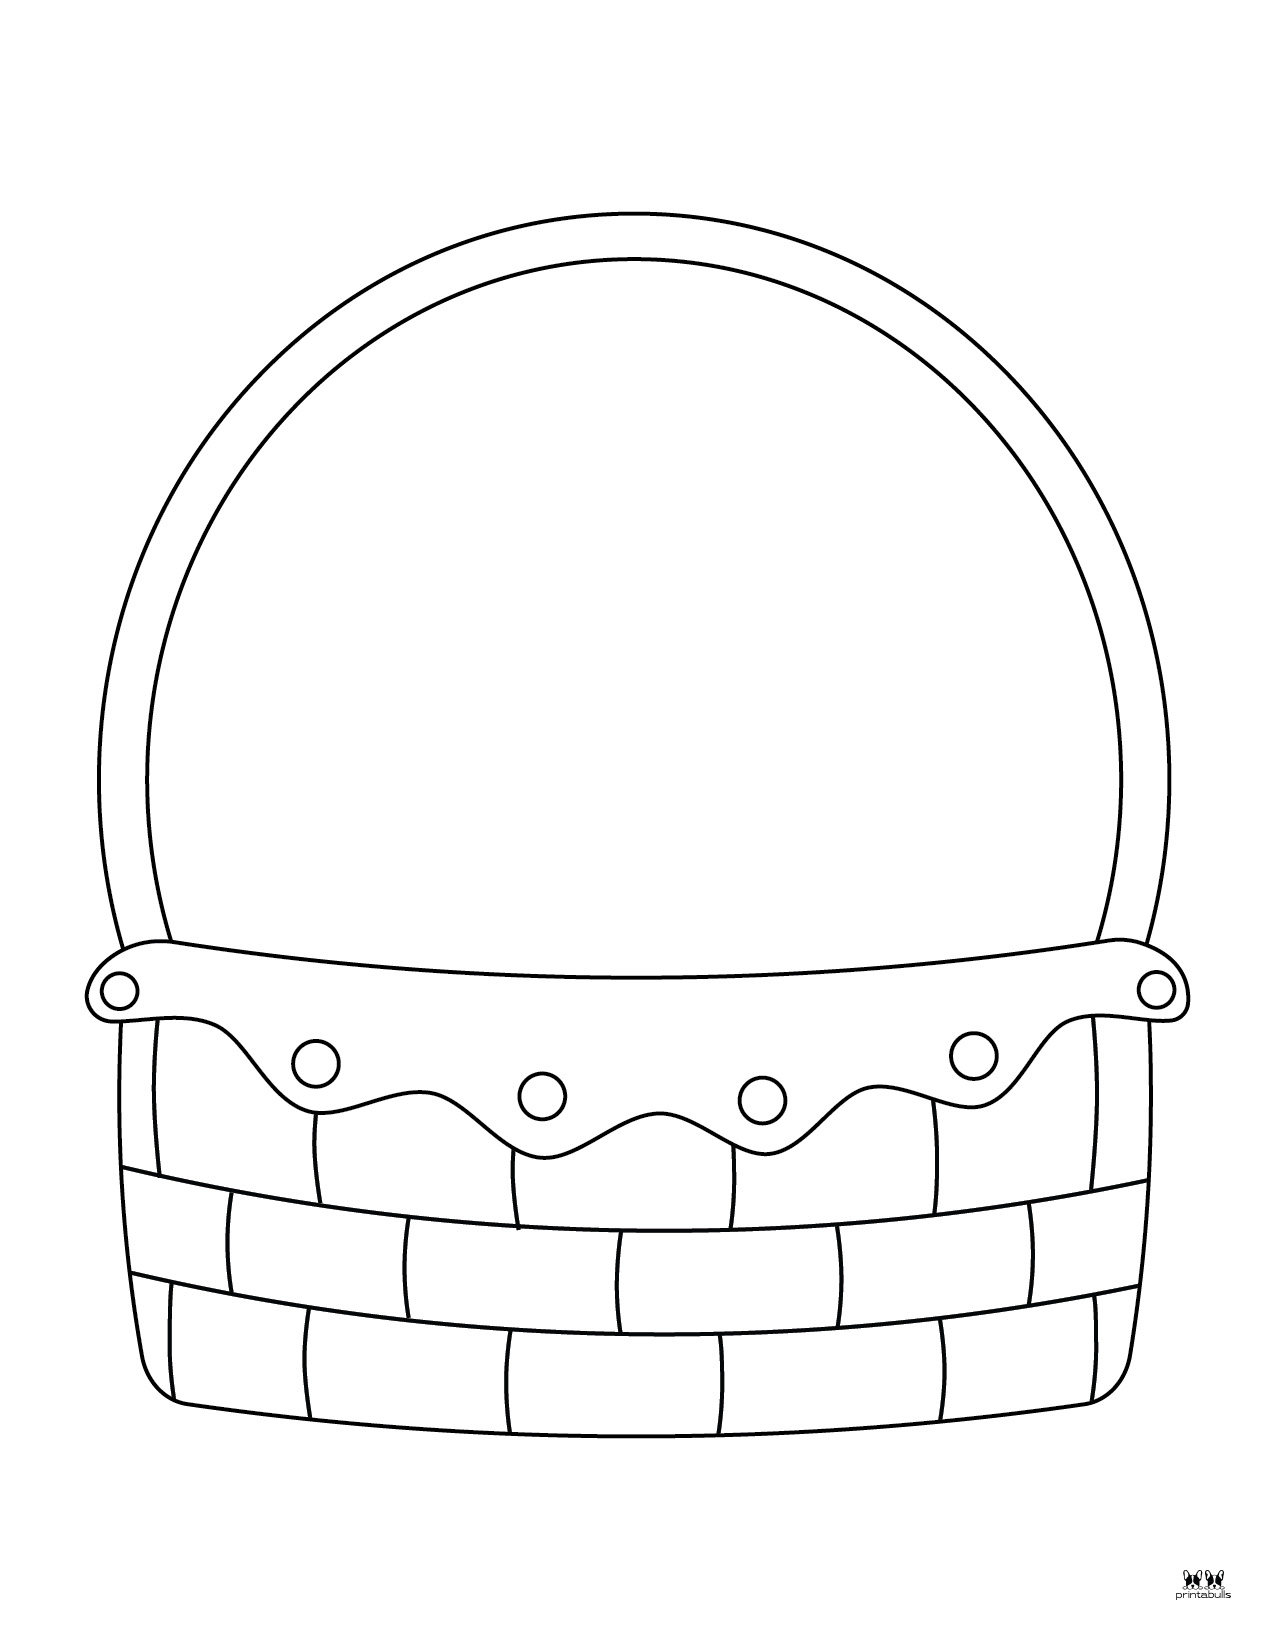 Easter Basket Templates - 25 FREE Printables | Printabulls